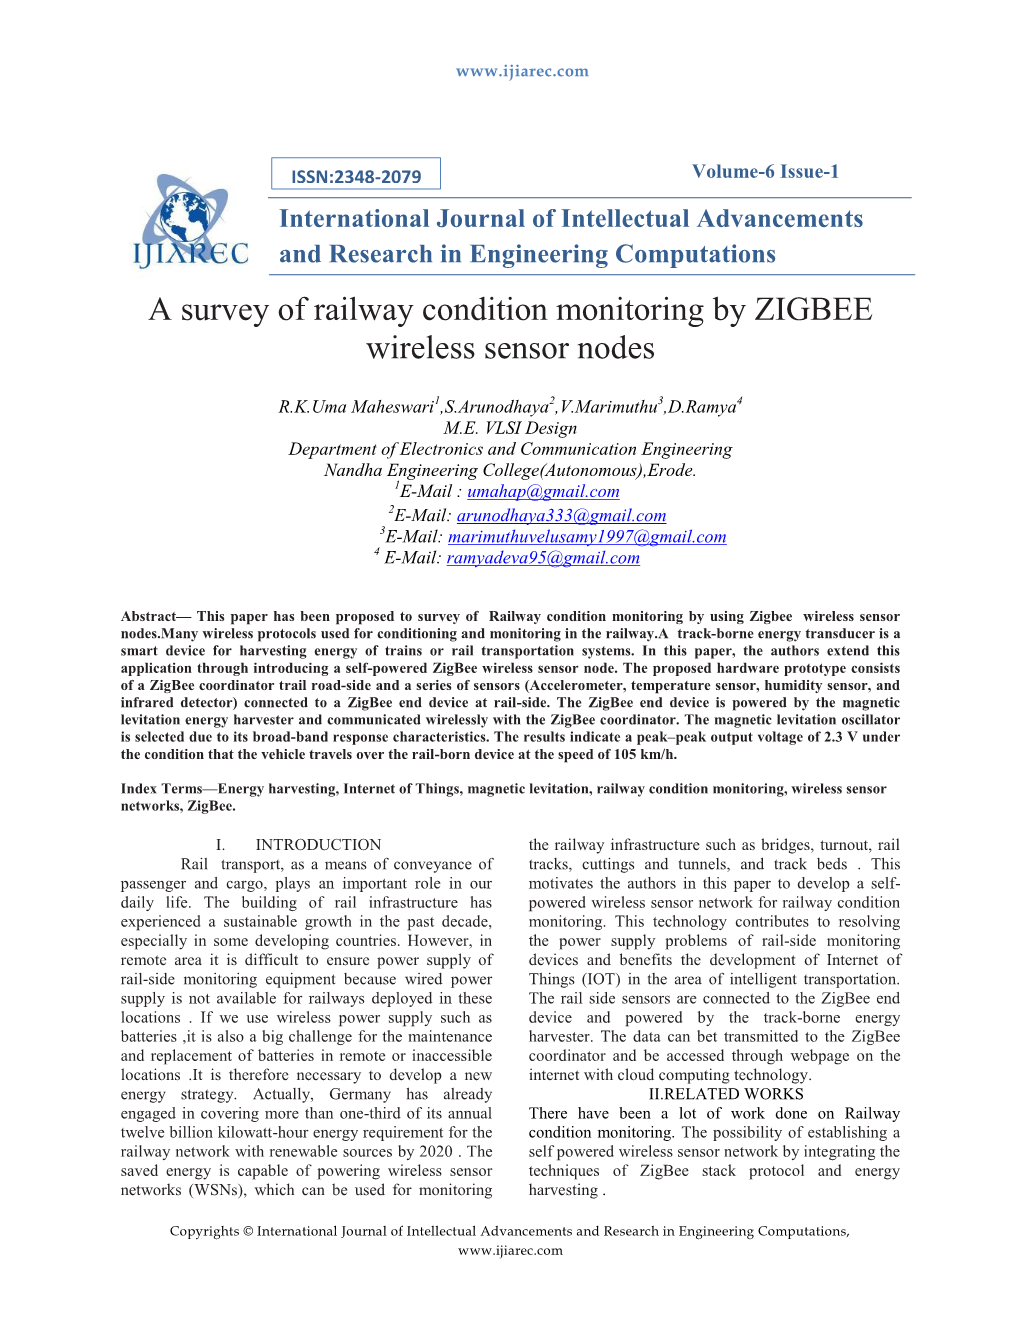 A Survey of Railway Condition Monitoring by ZIGBEE Wireless Sensor Nodes